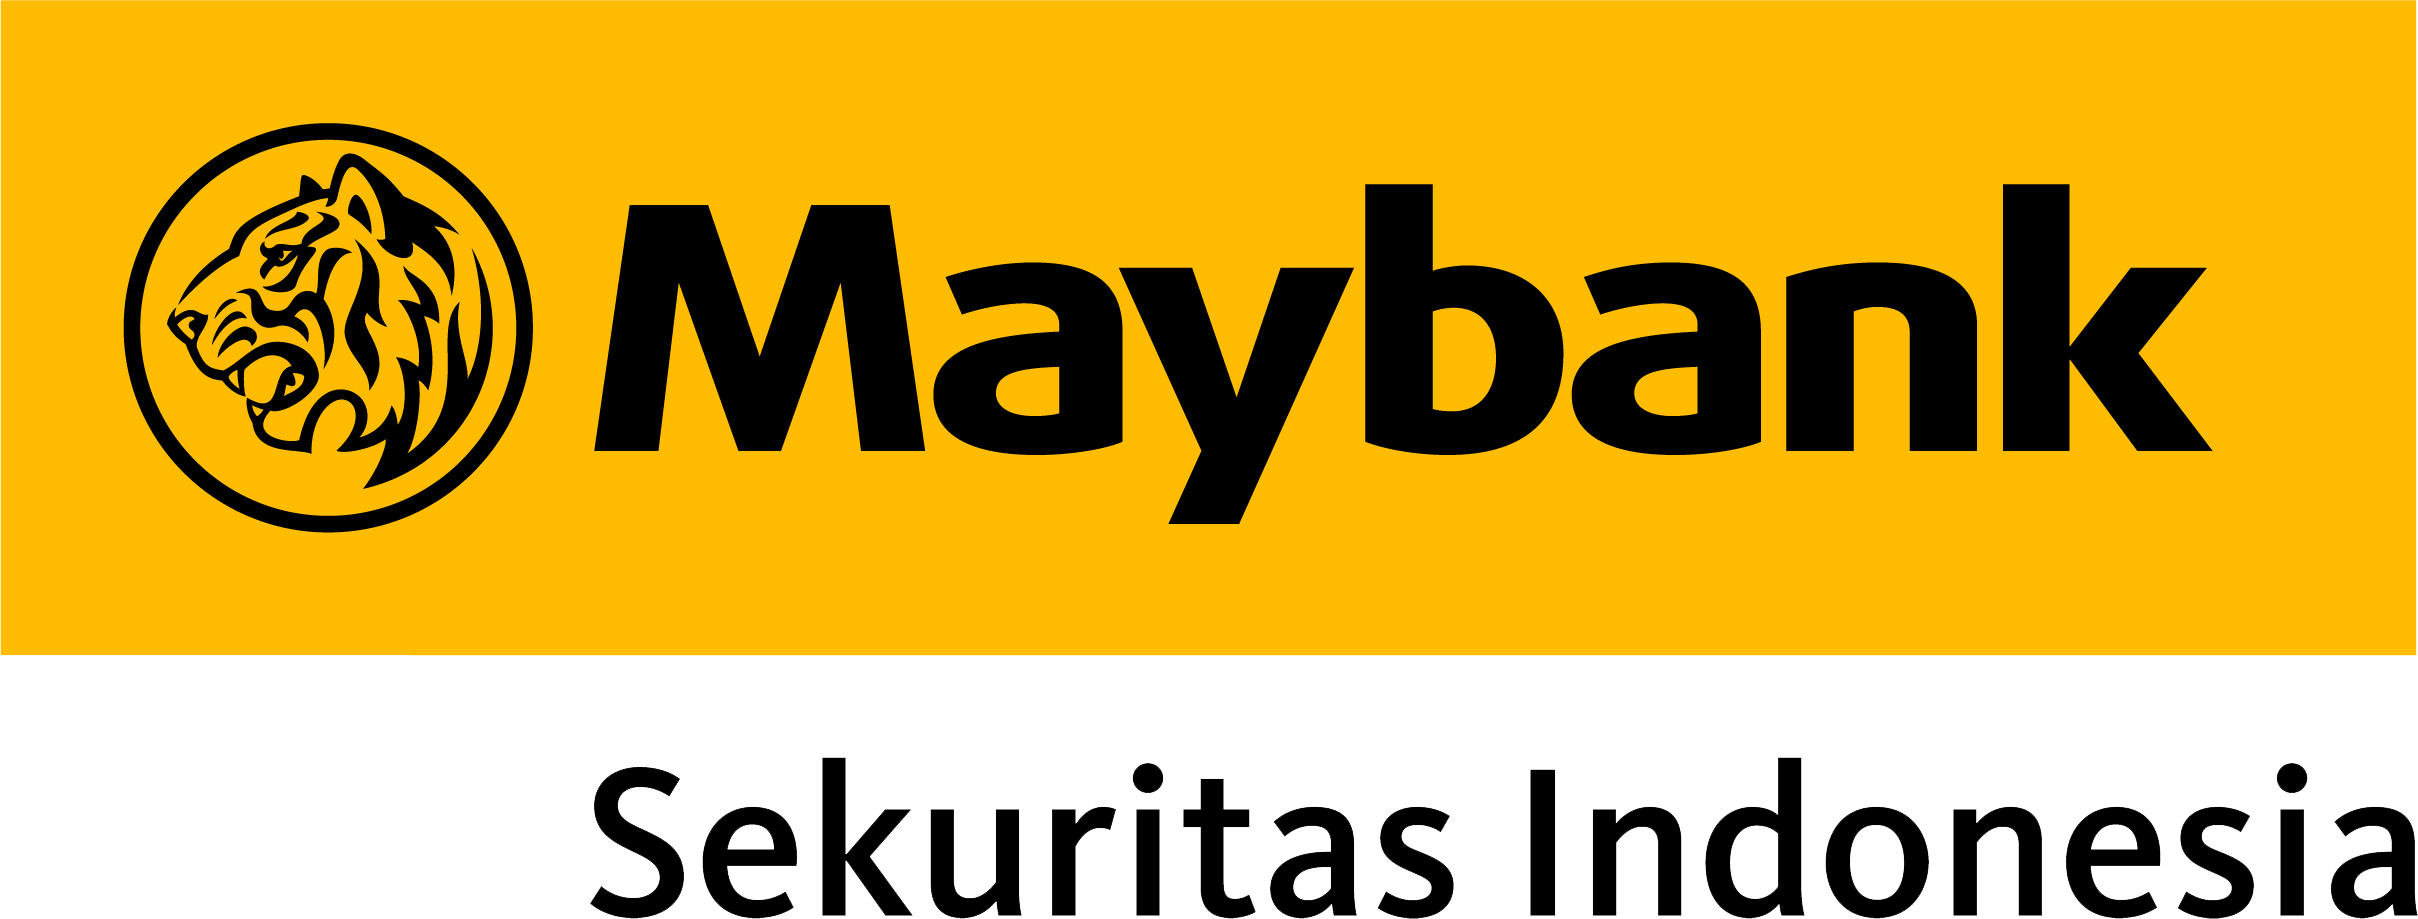 Maybank Indonesia logo